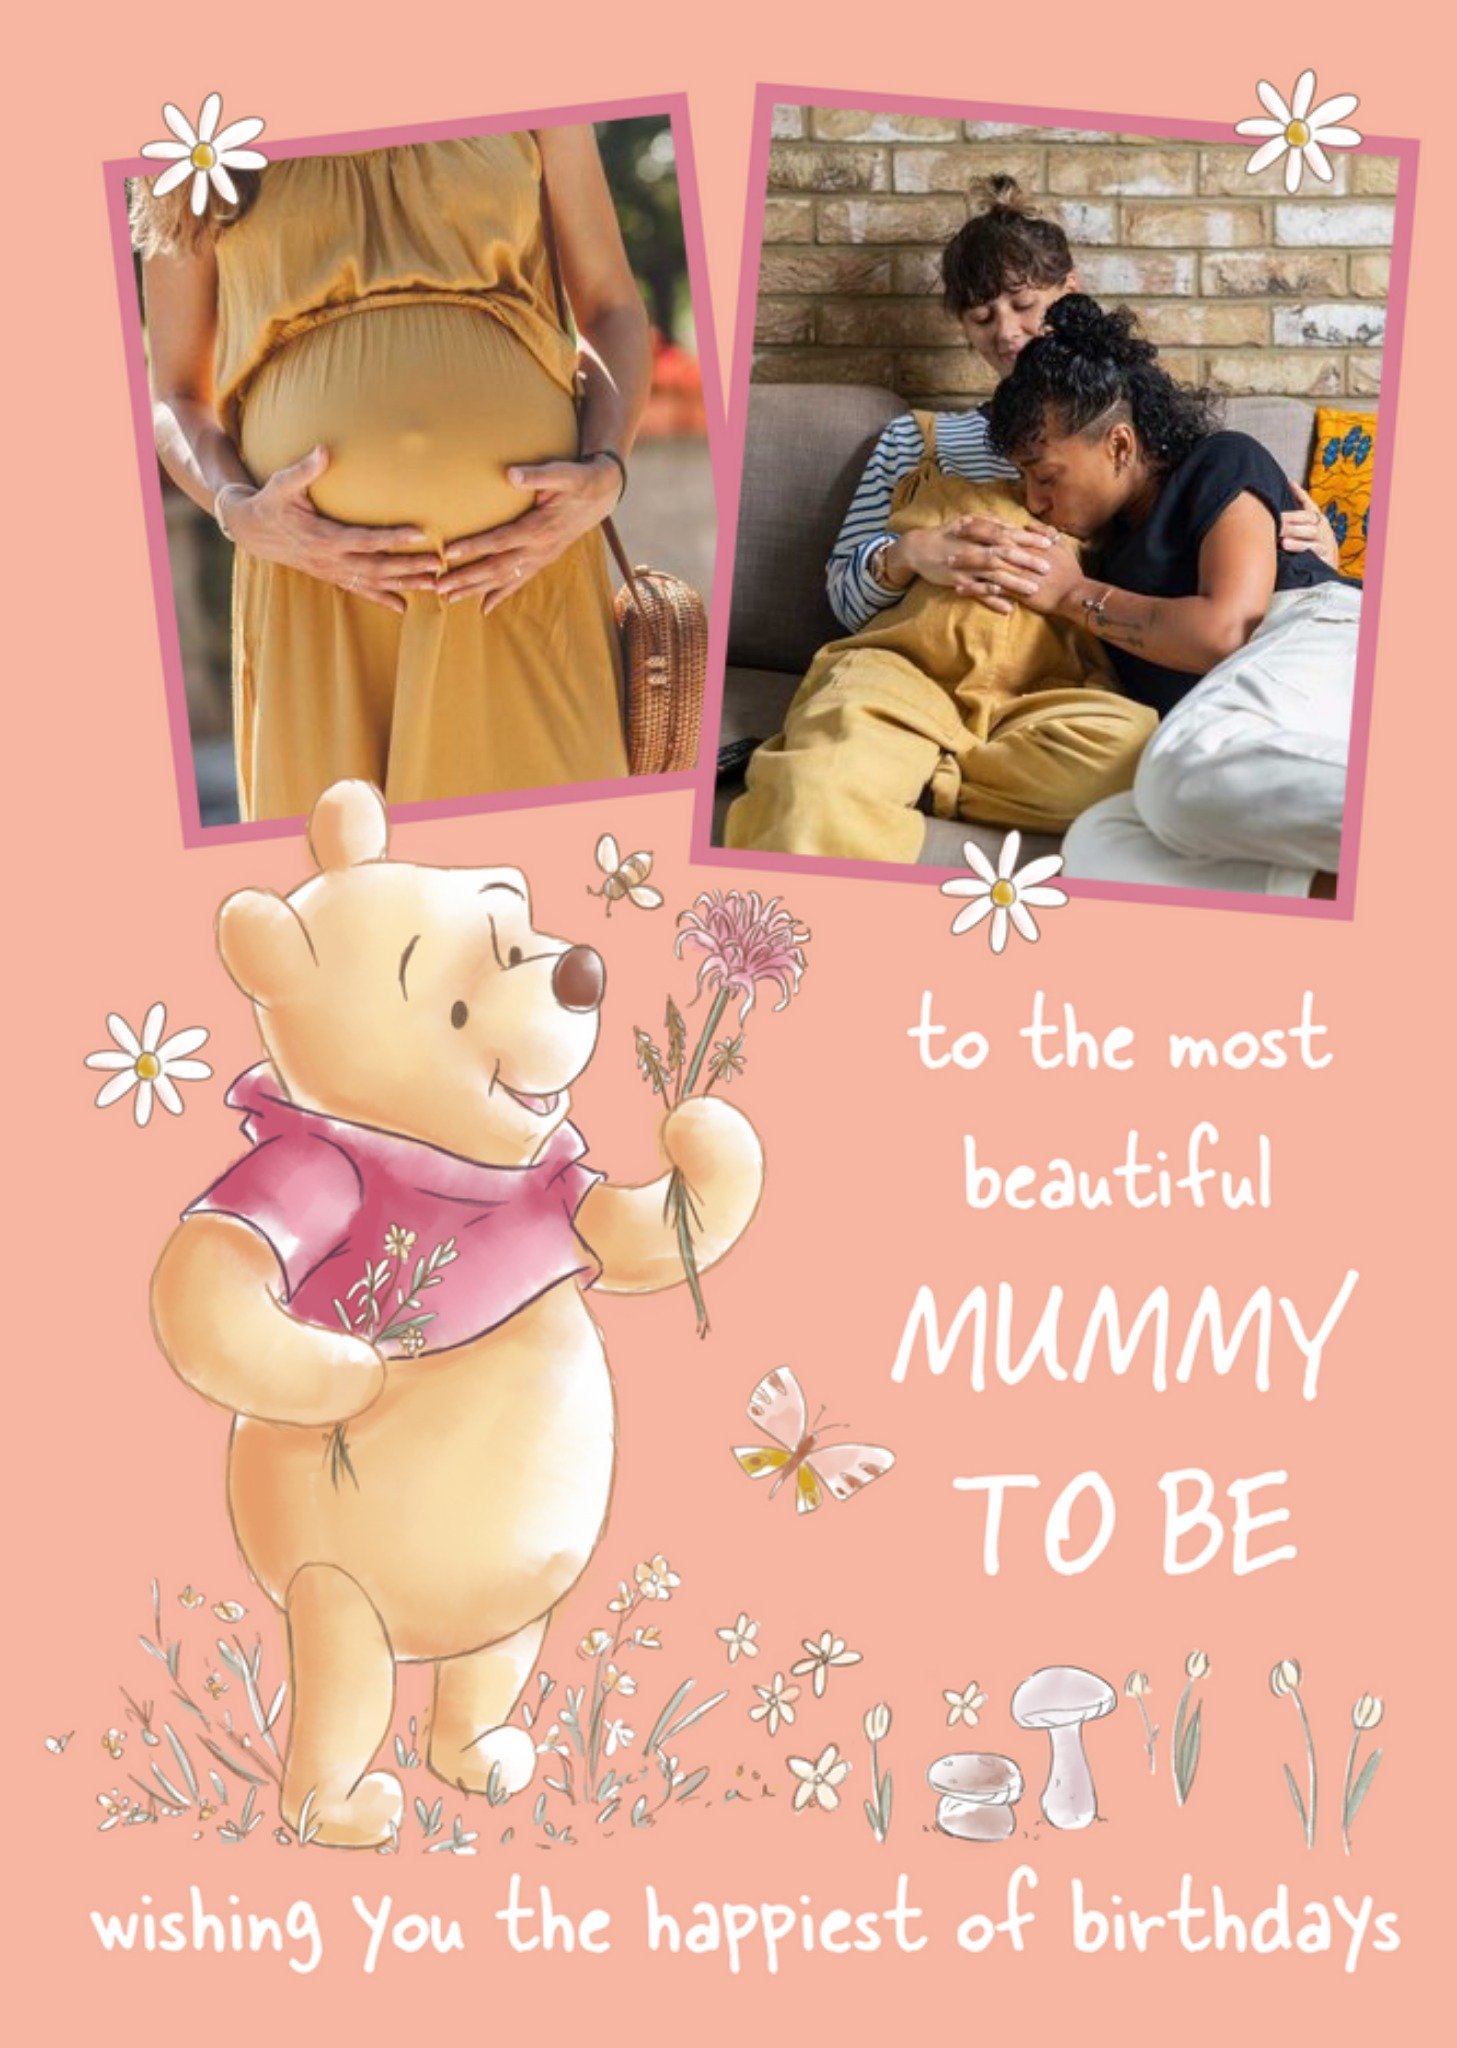 Cute Disney Winnie The Pooh Photo Upload Mummy To Be Birthday Card, Large